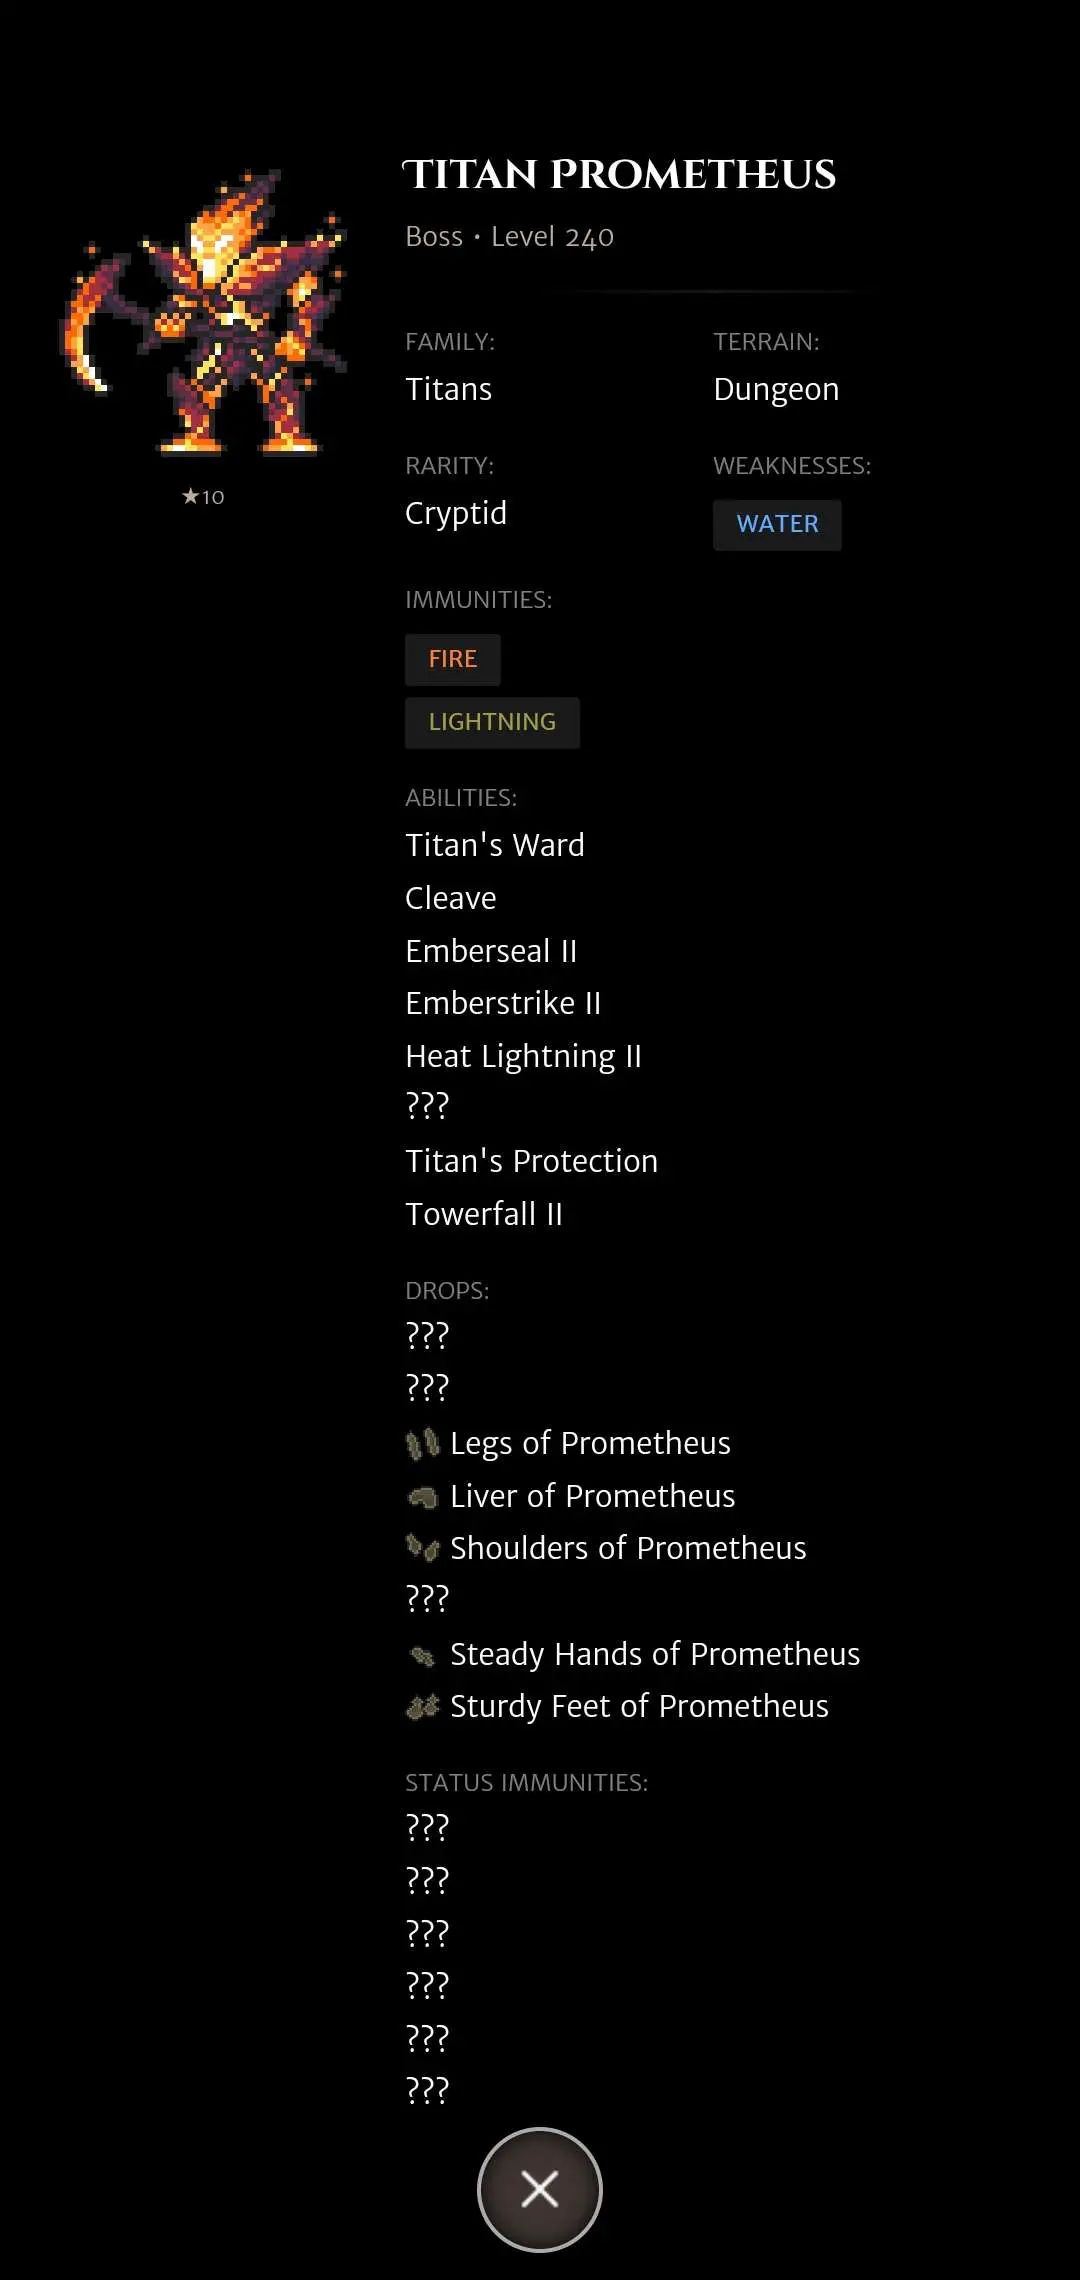 Titan Prometheus codex entry